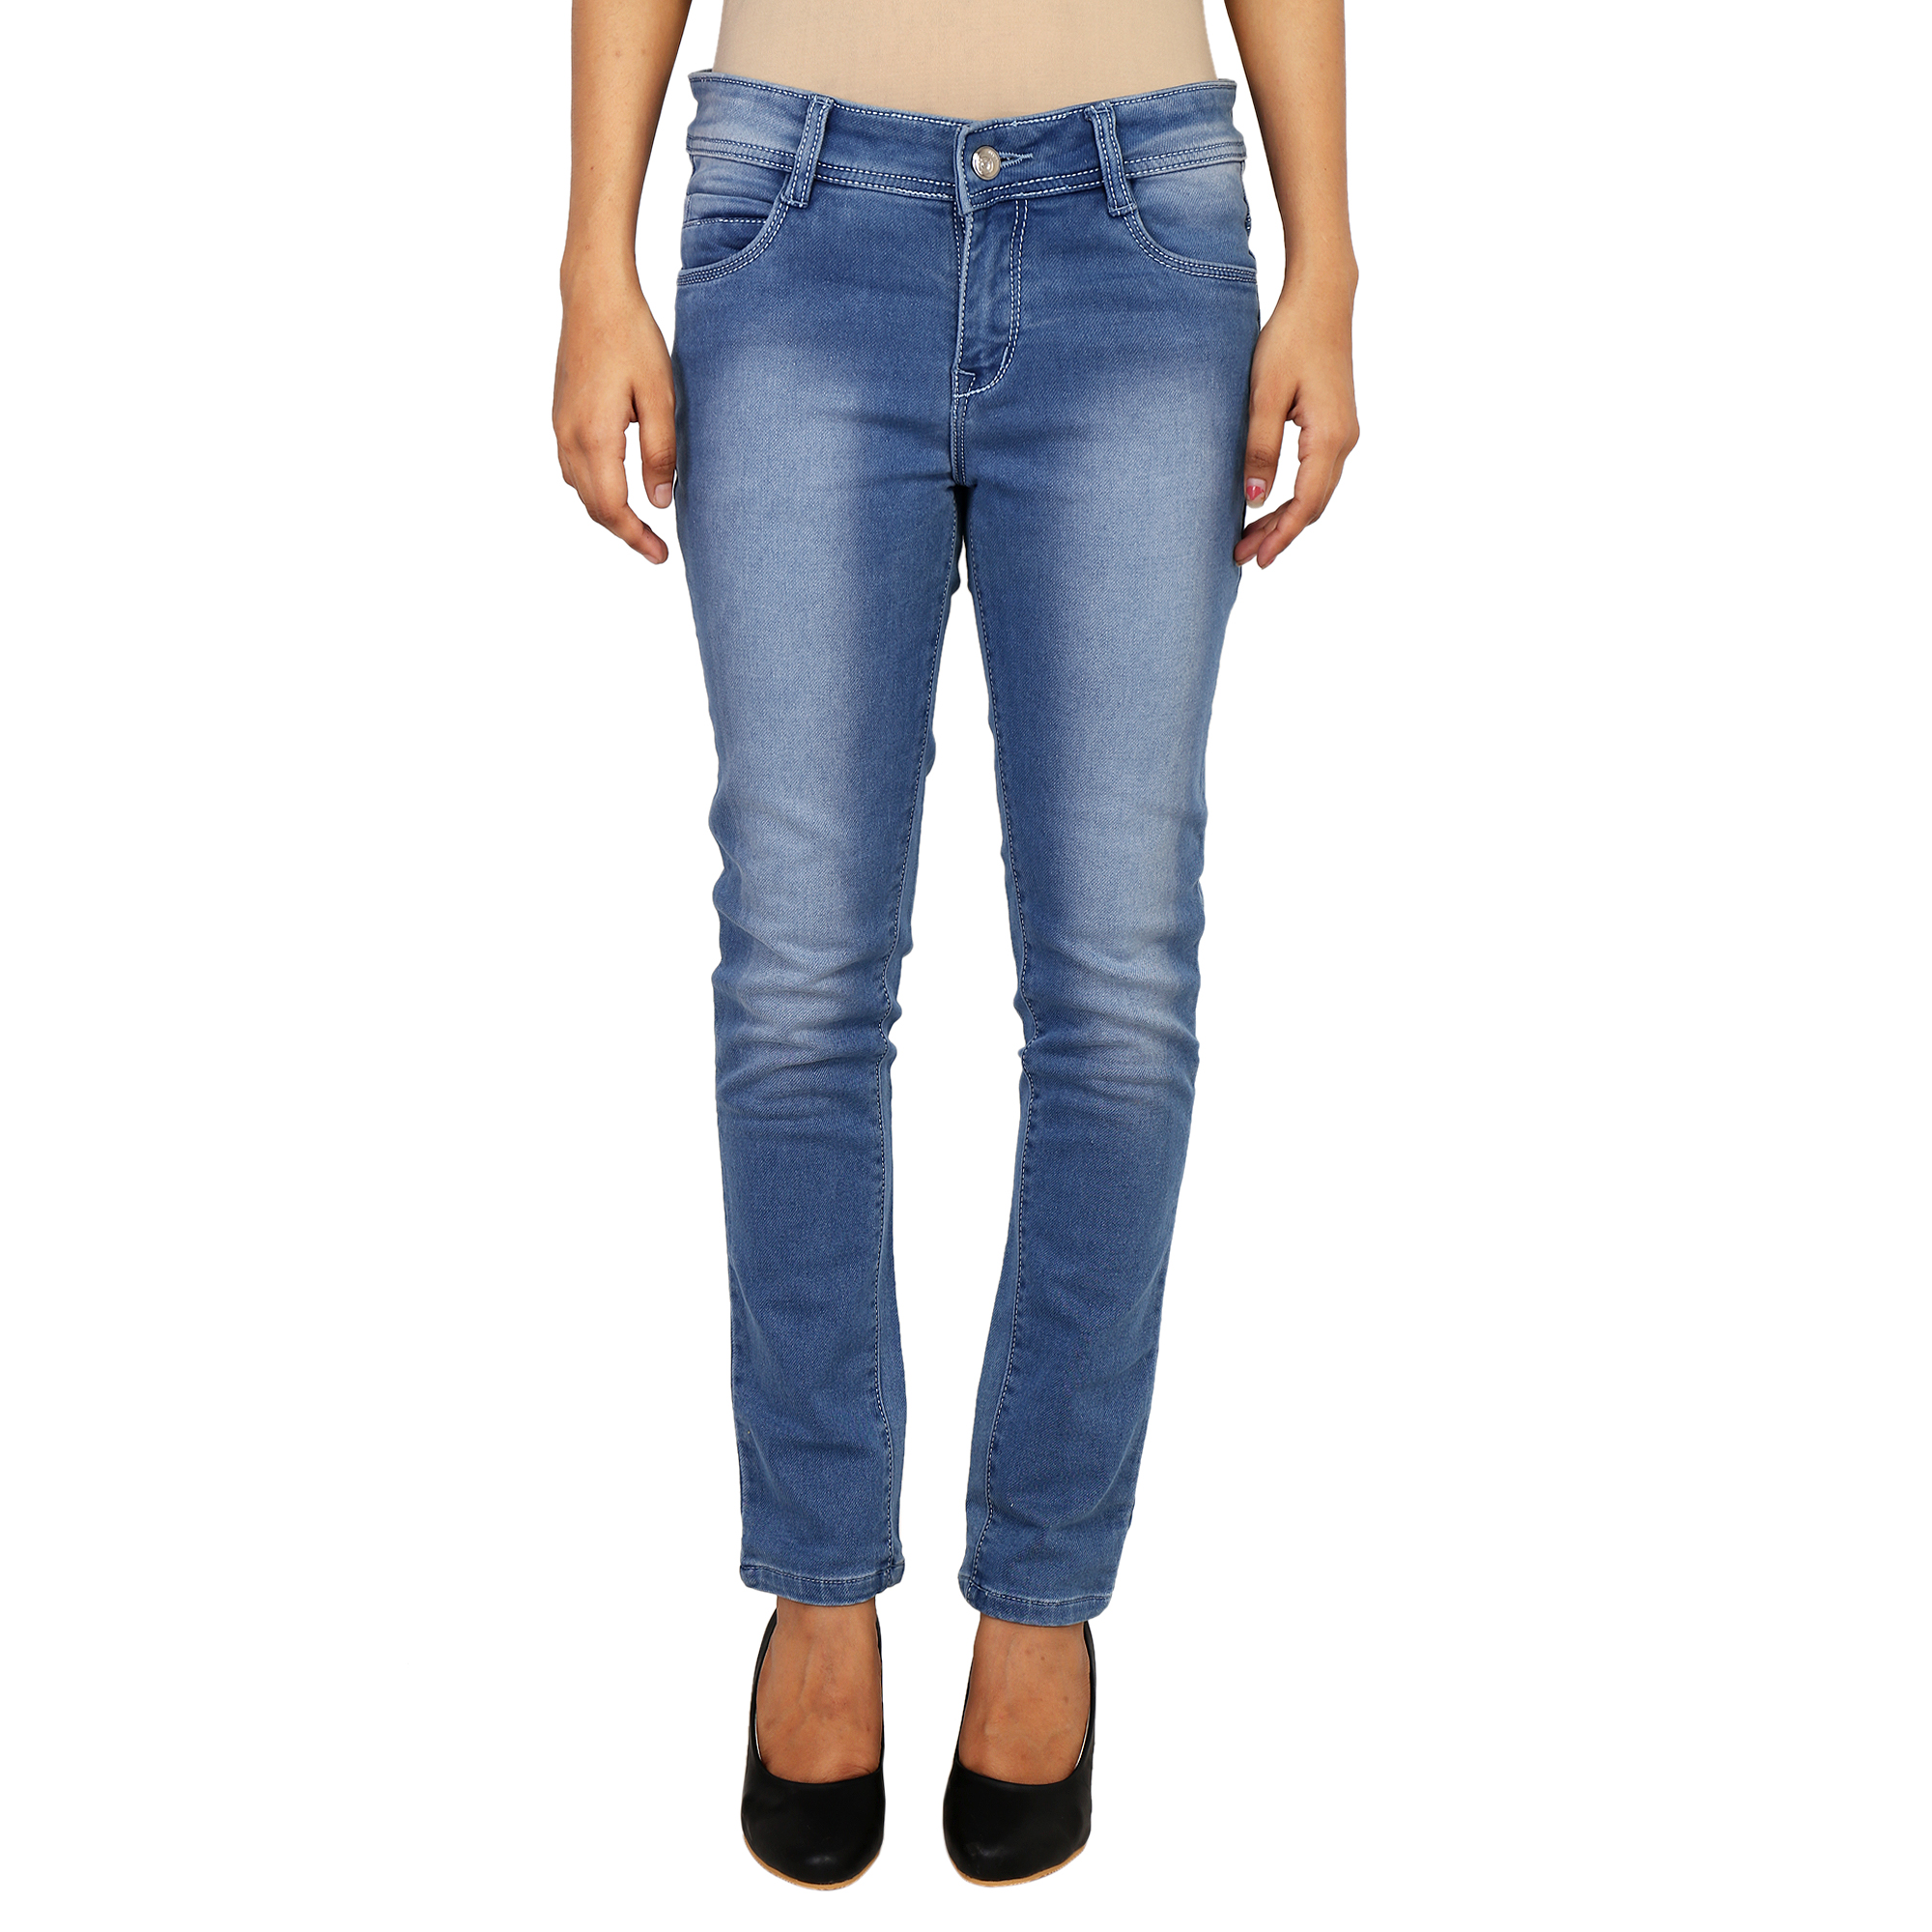 Buy Immense regular slim skinny fit fashionable women's jeans joggers ...